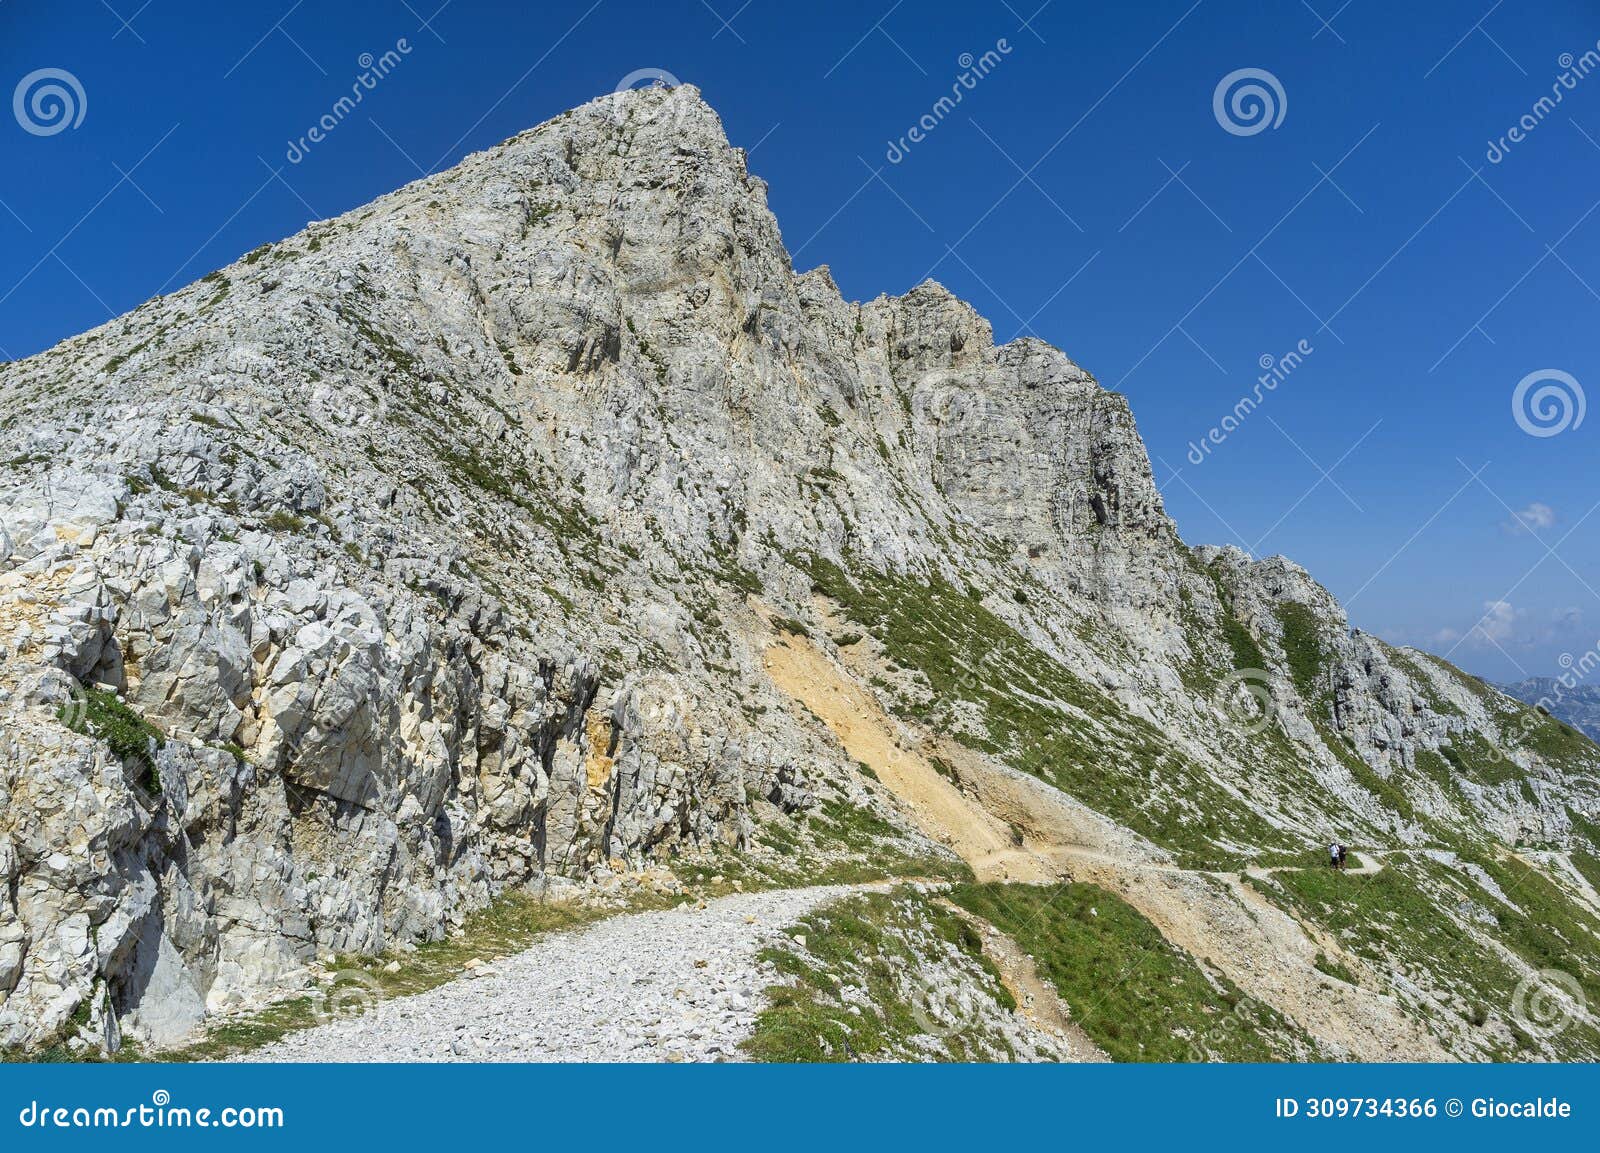 cima carega, the highest mountain in the homonymous mountain range